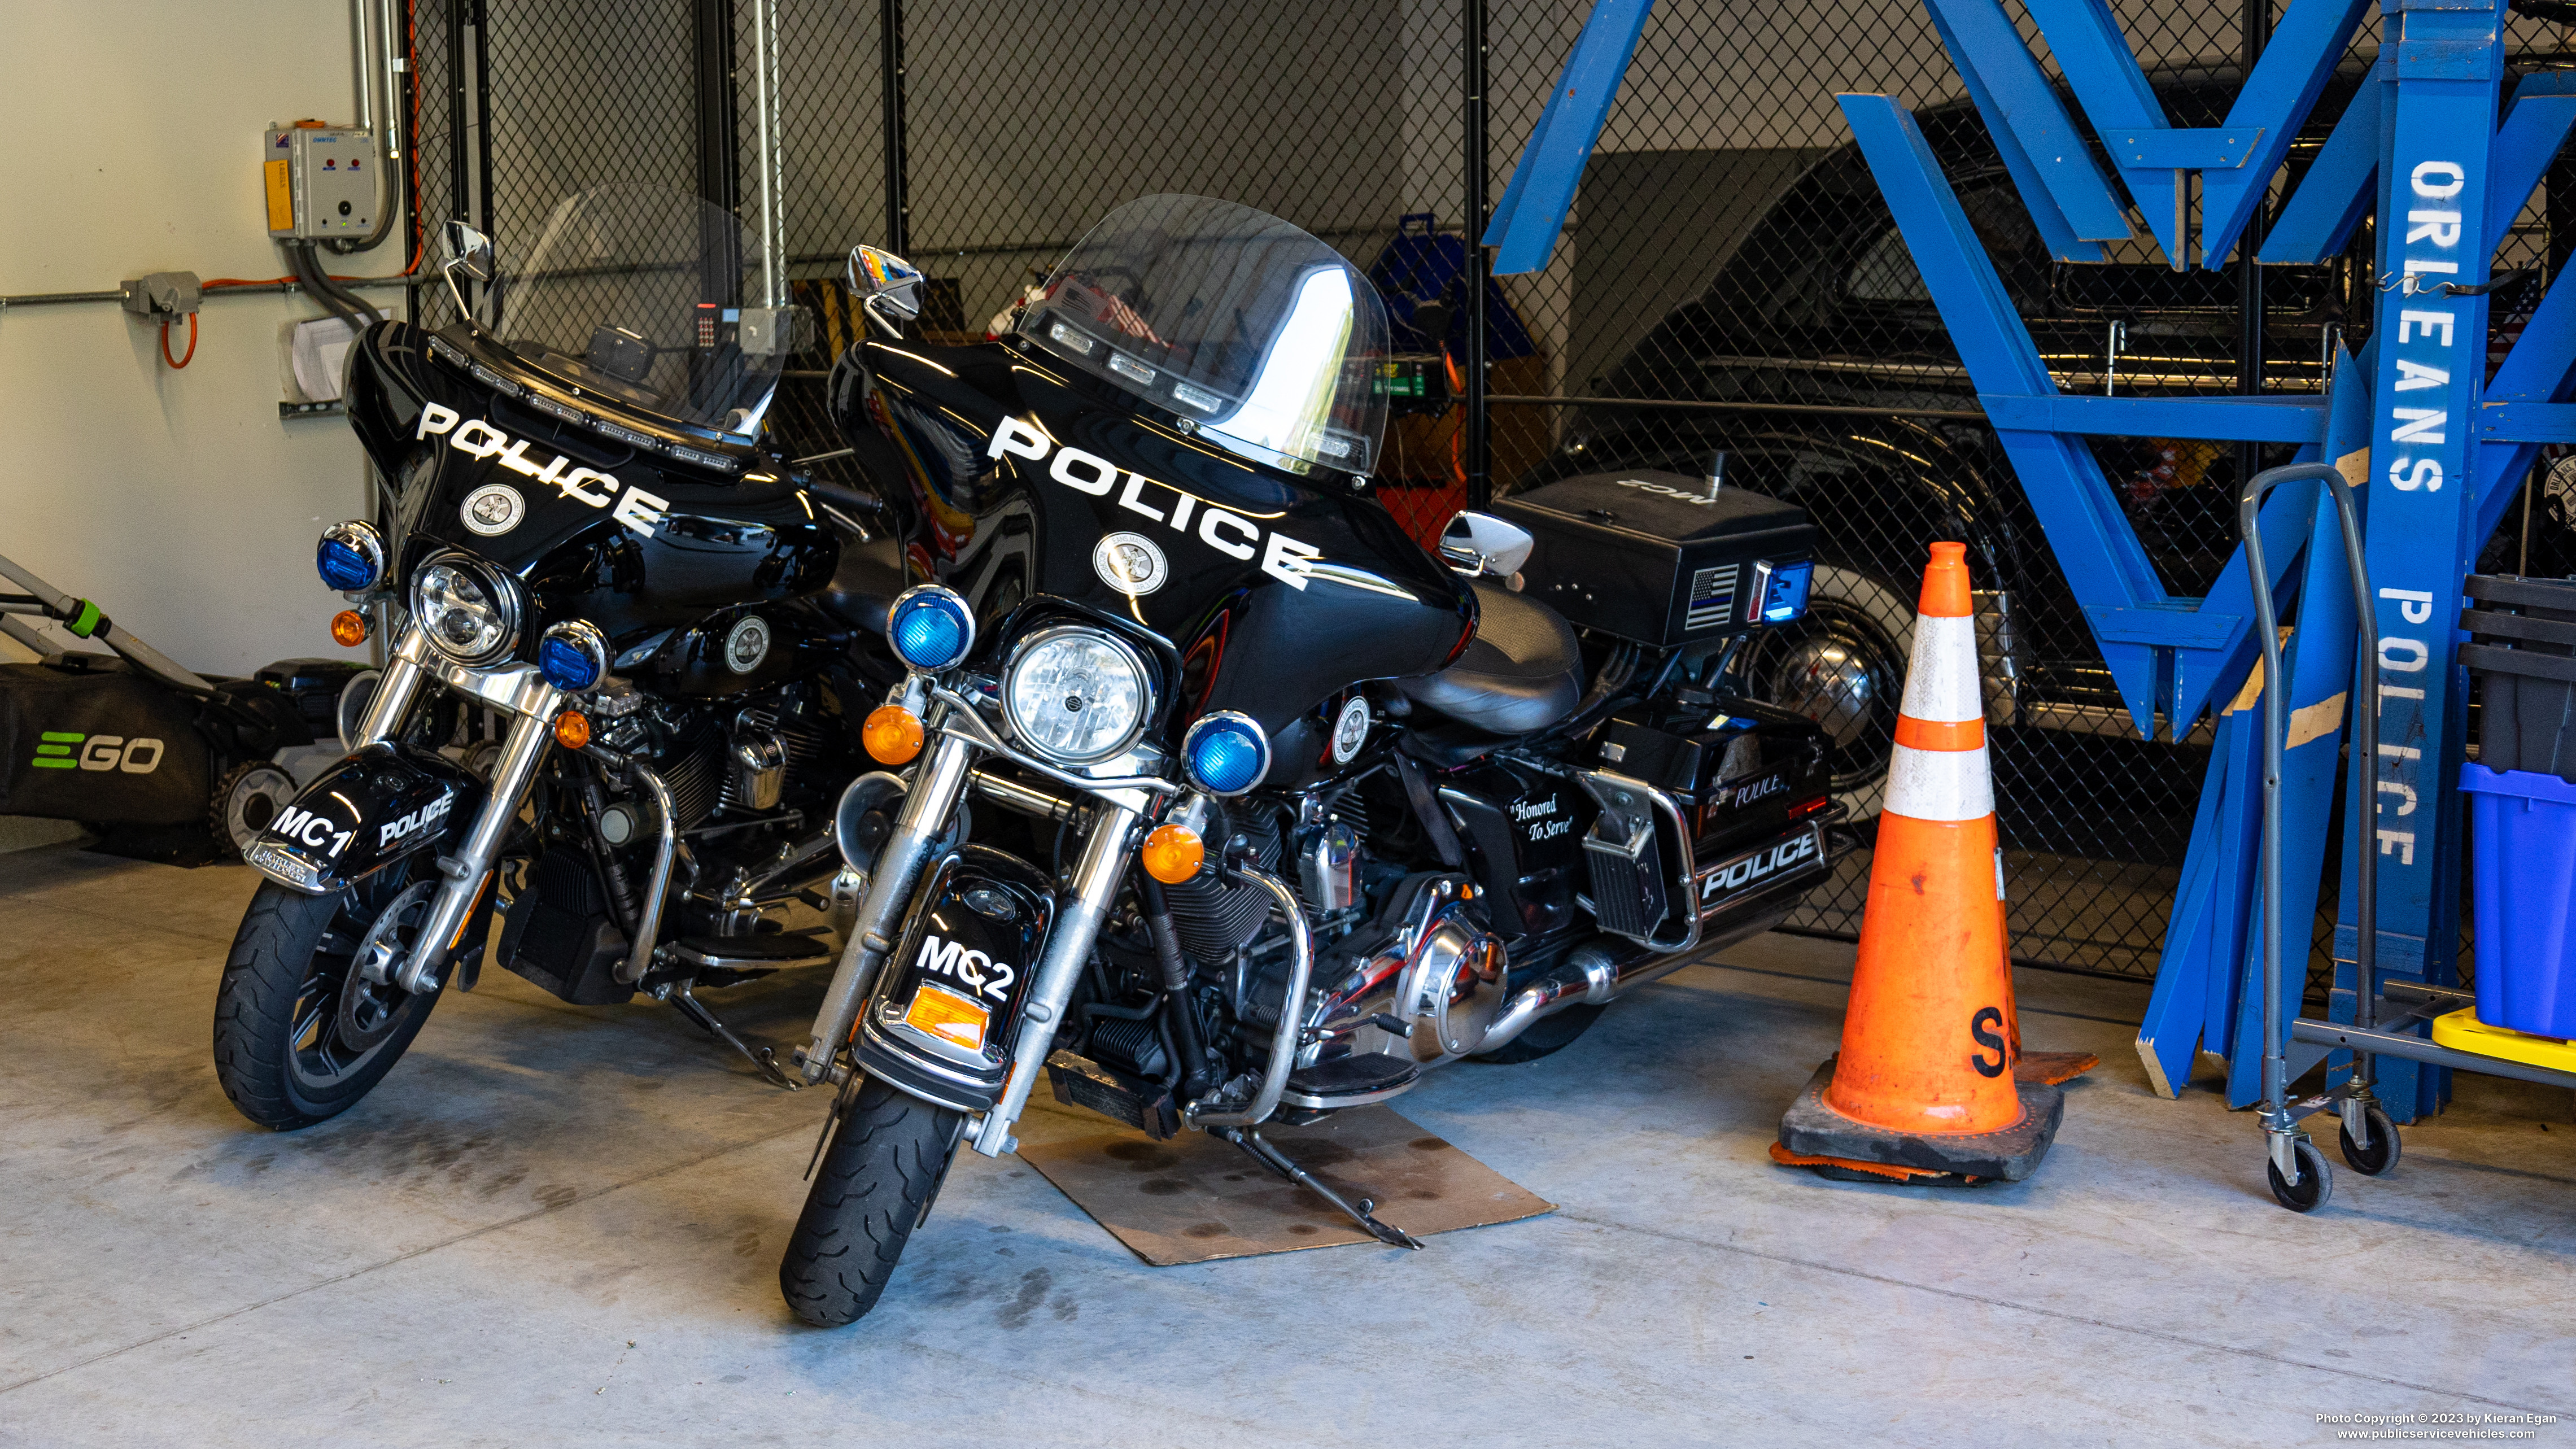 A photo  of Orleans Police
            Motorcycle 2, a 2010-2019 Harley Davidson Electra Glide             taken by Kieran Egan